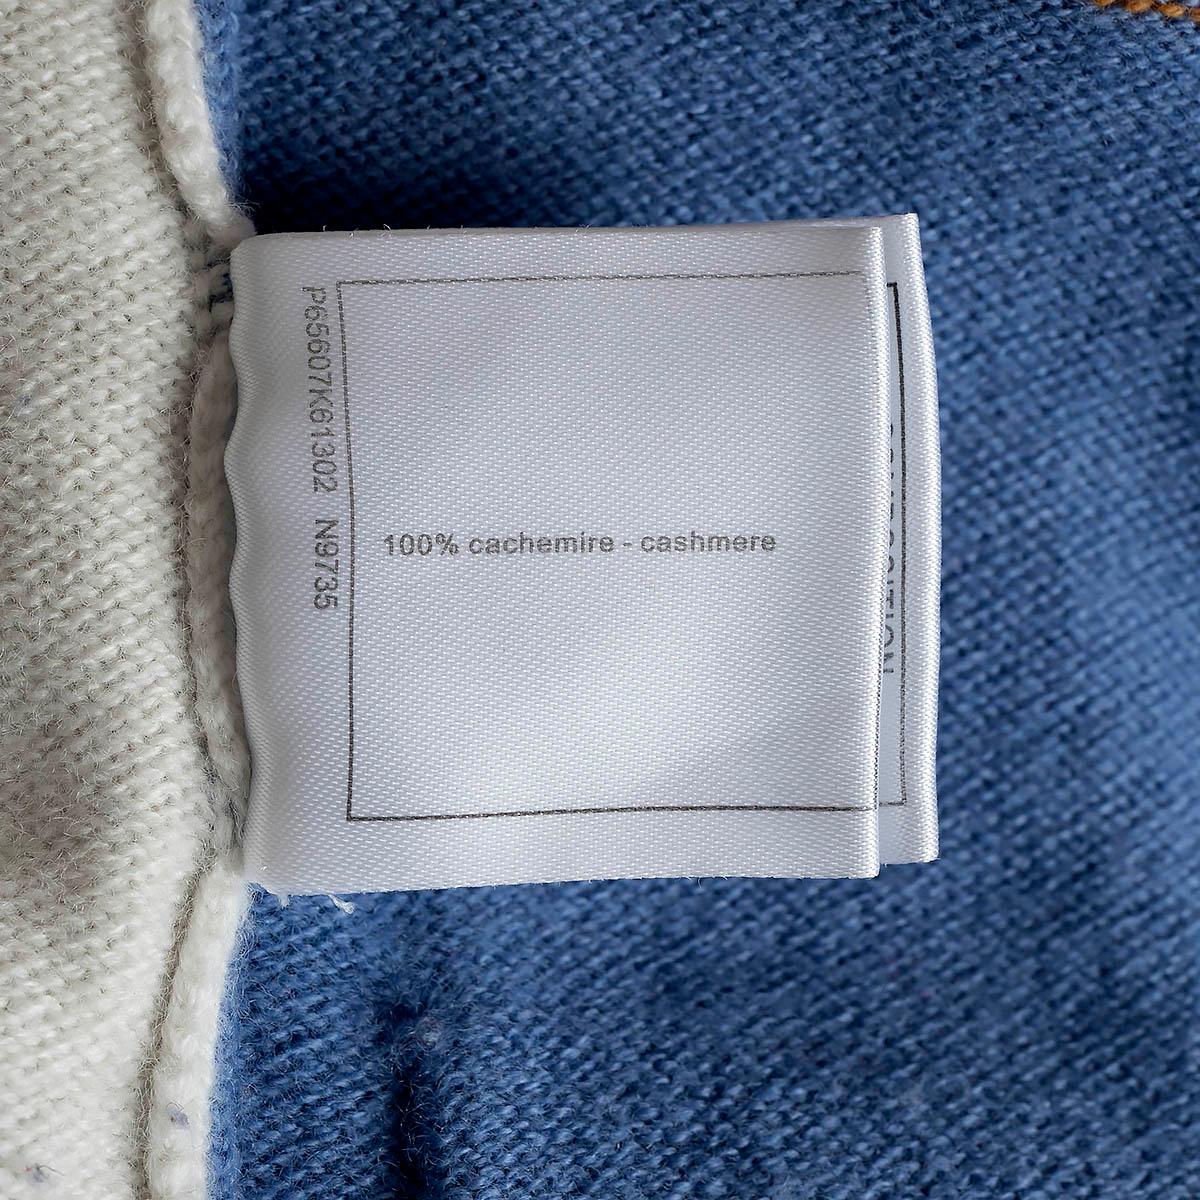 CHANEL multicolor cashmere 2020 20K COLORBLOCK Cardigan Sweater 36 XS For Sale 4